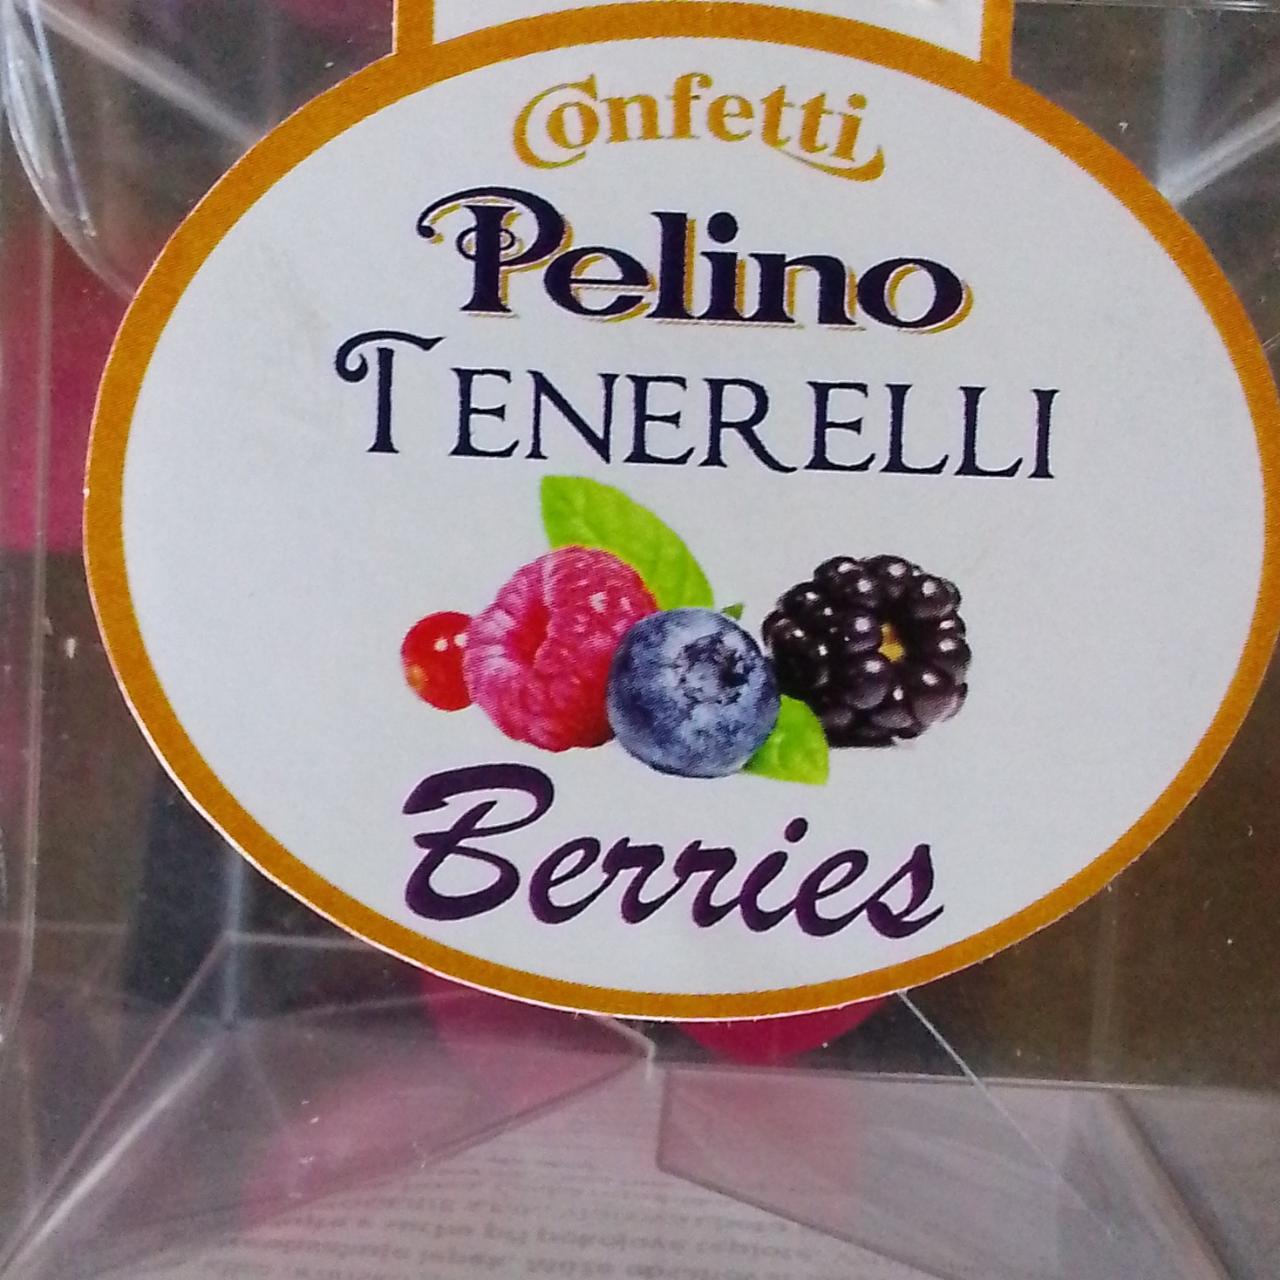 Fotografie - Confetti Pelino Tenerelli Berries